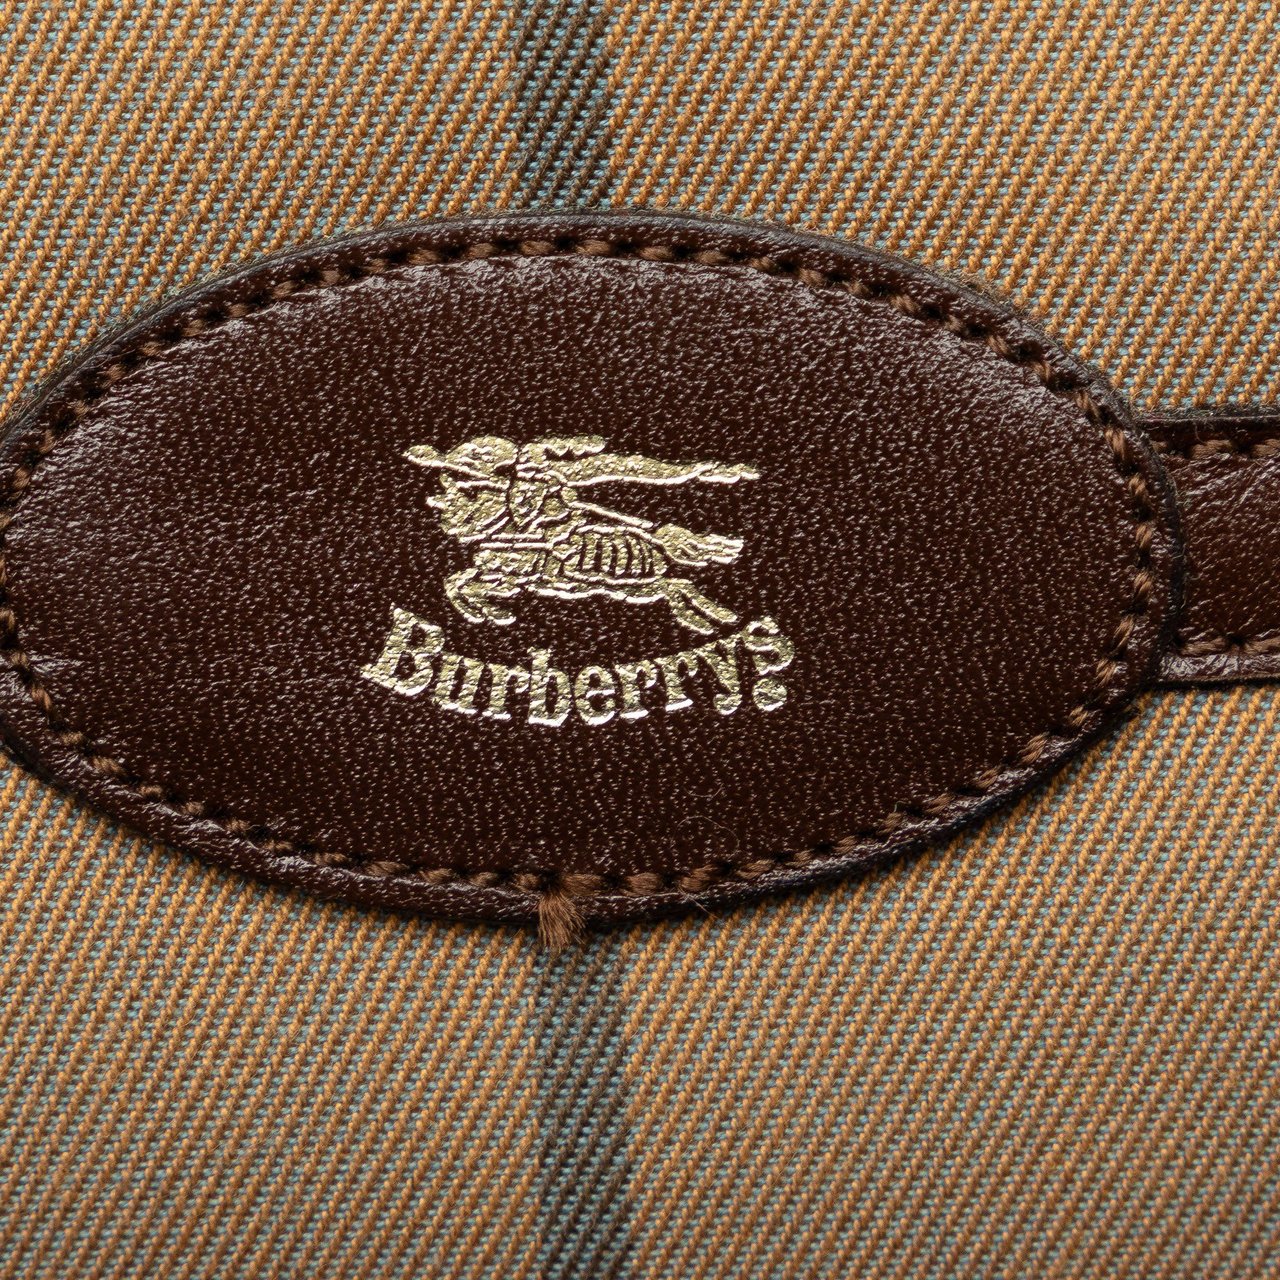 Burberry Vintage Check Crossbody Bag Bruin